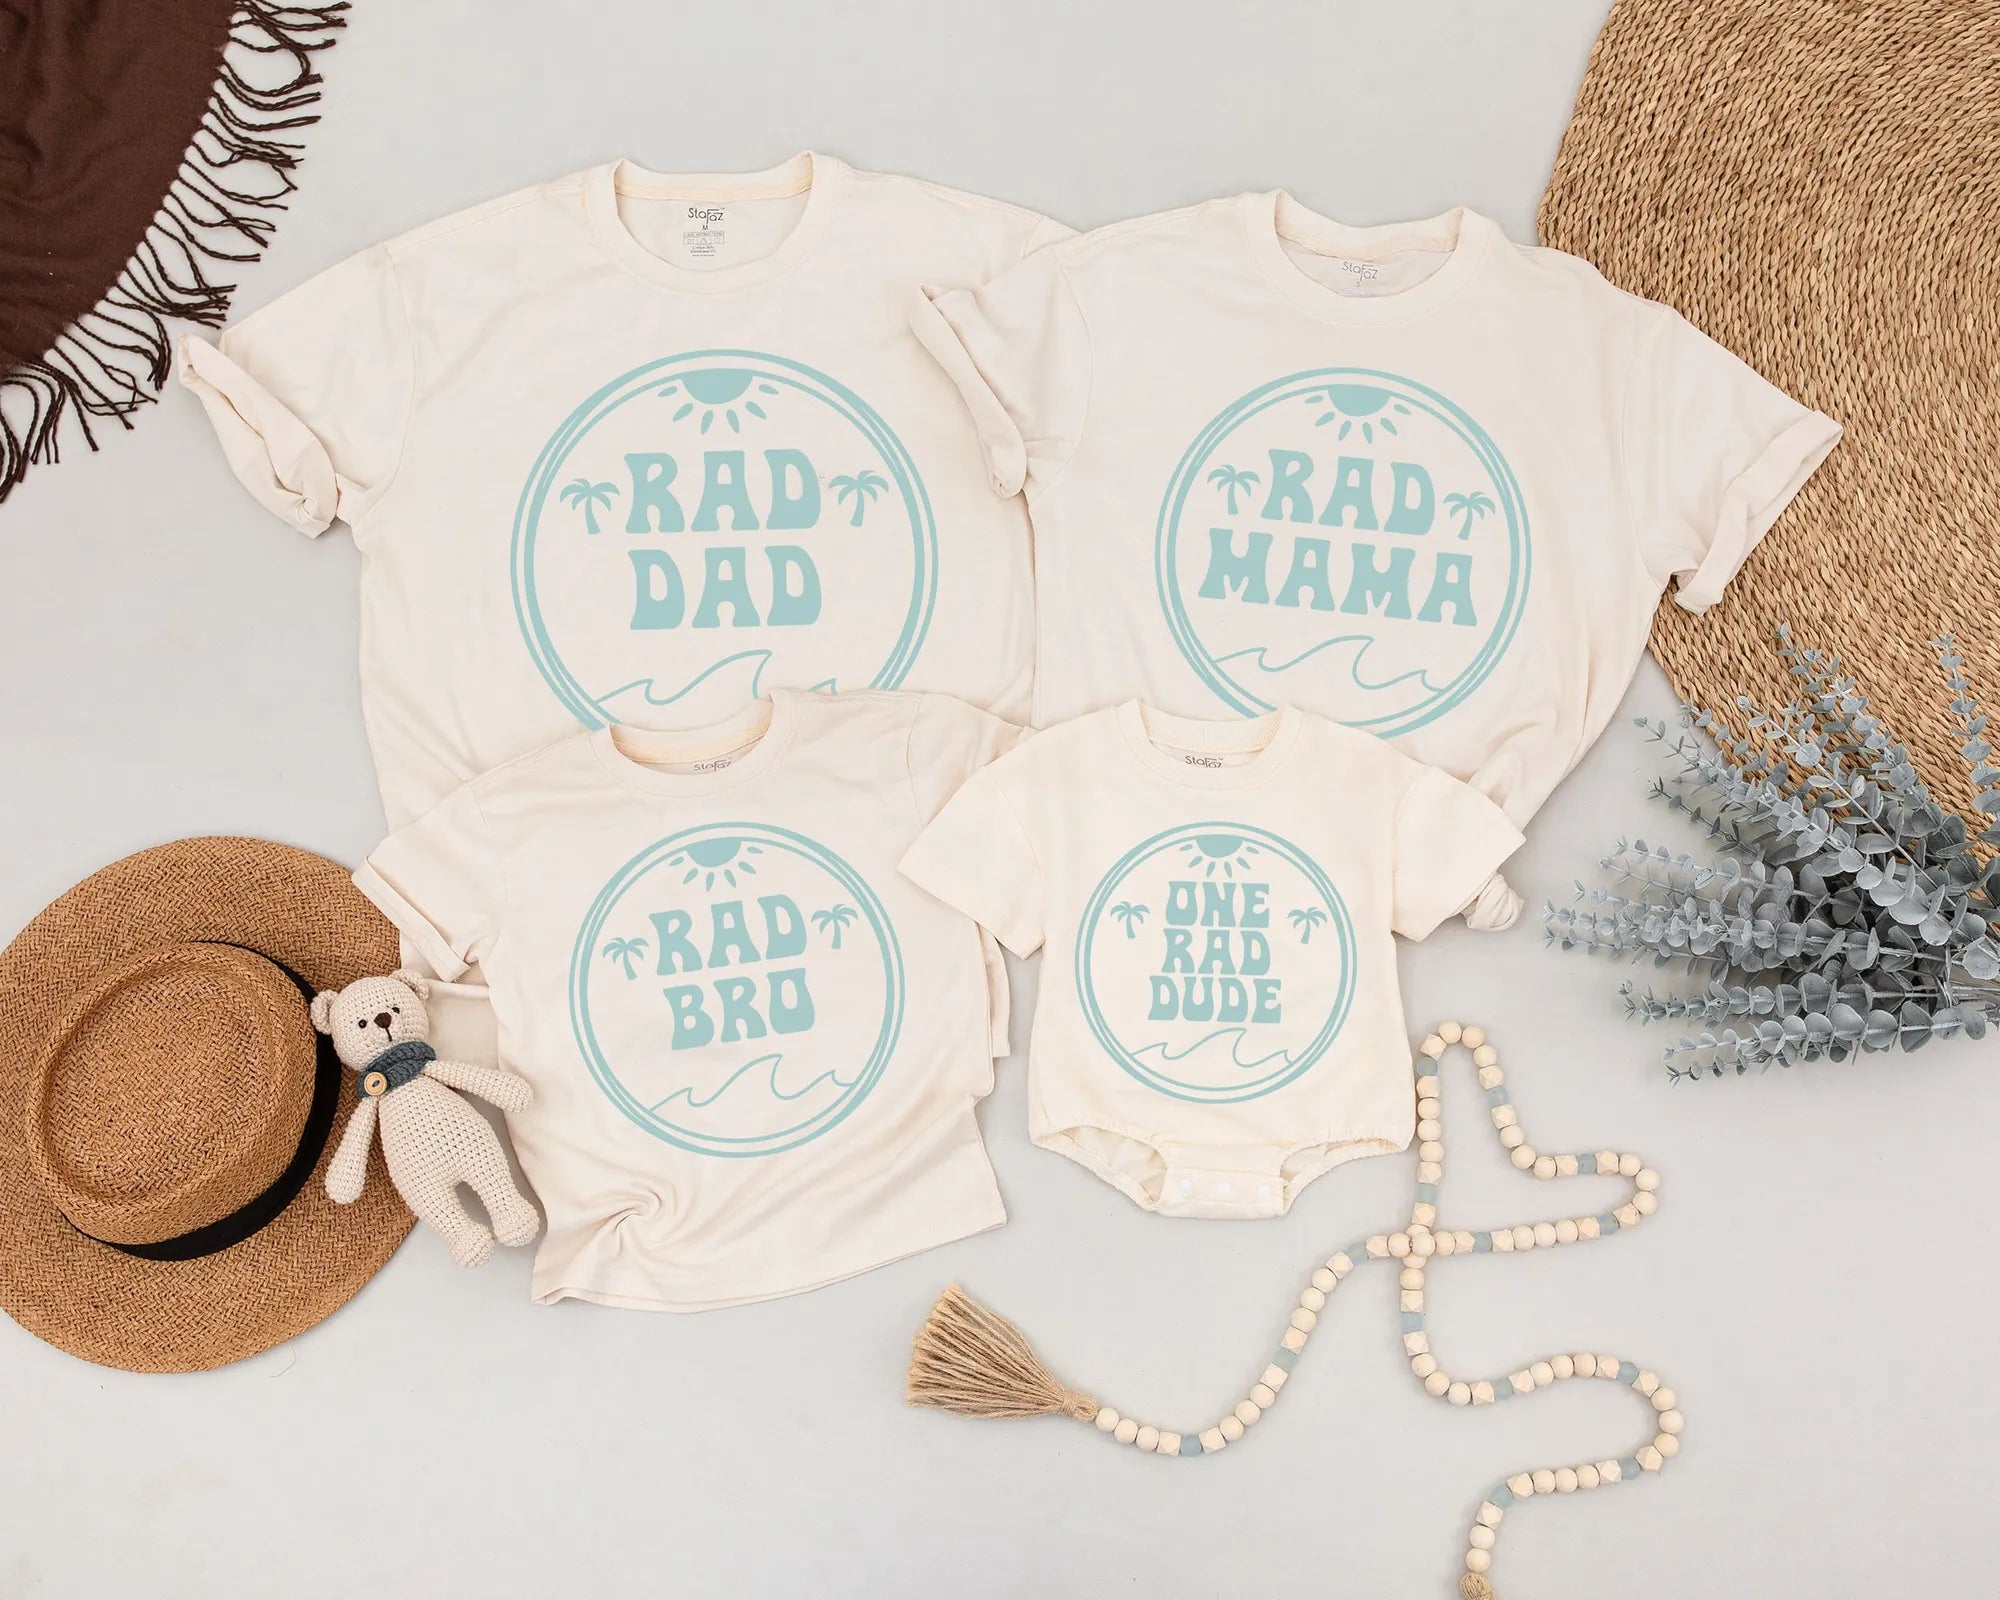 Surf Family Birthday Shirts: Rad Dad & Baby Duo